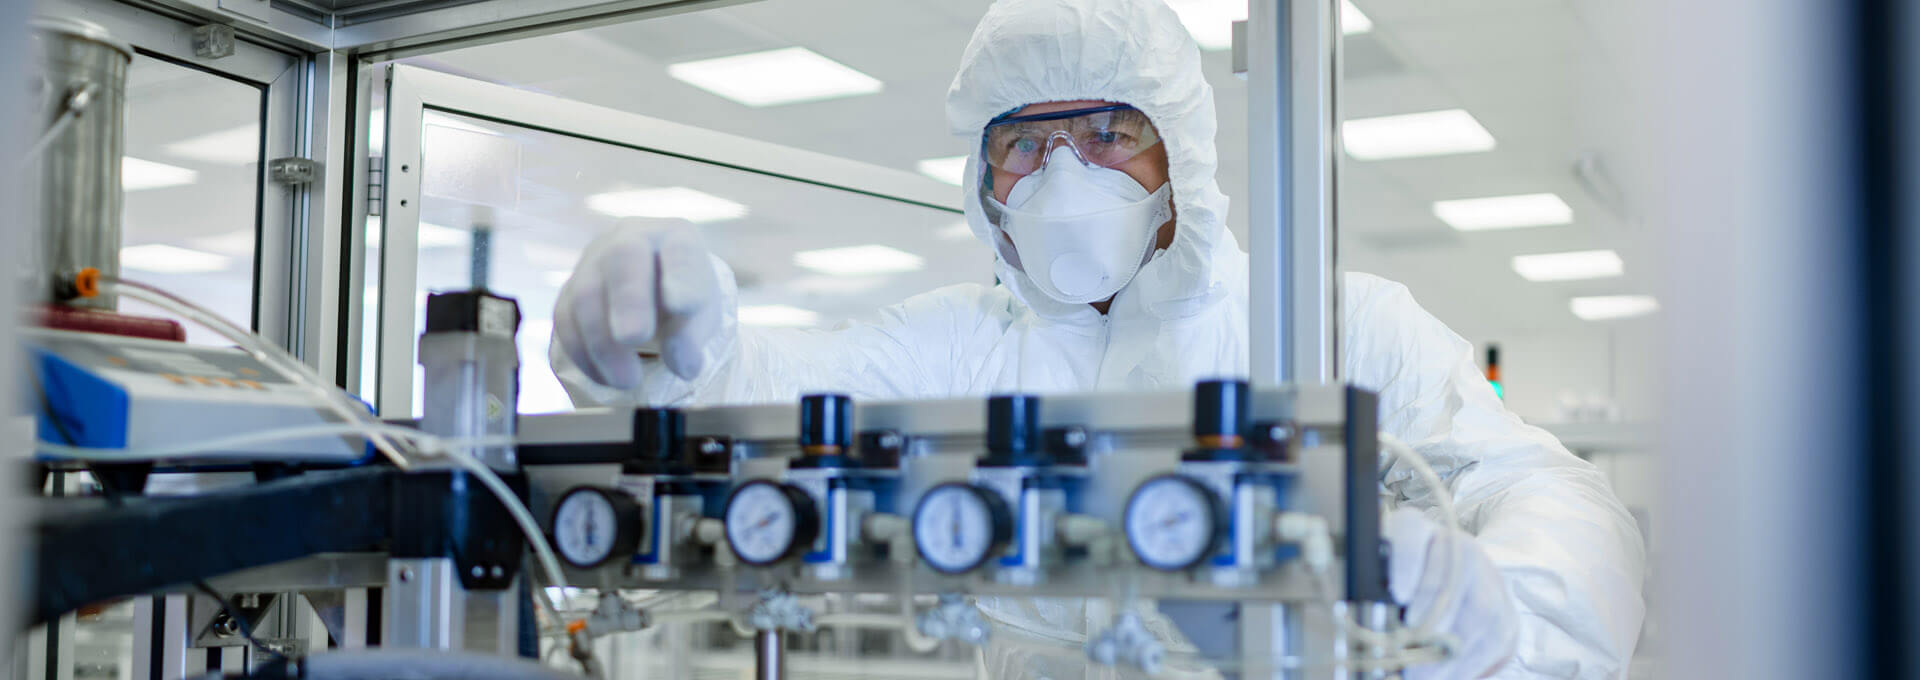 FDA Initiatives Drive 21st Century Advanced Manufacturing Technologies